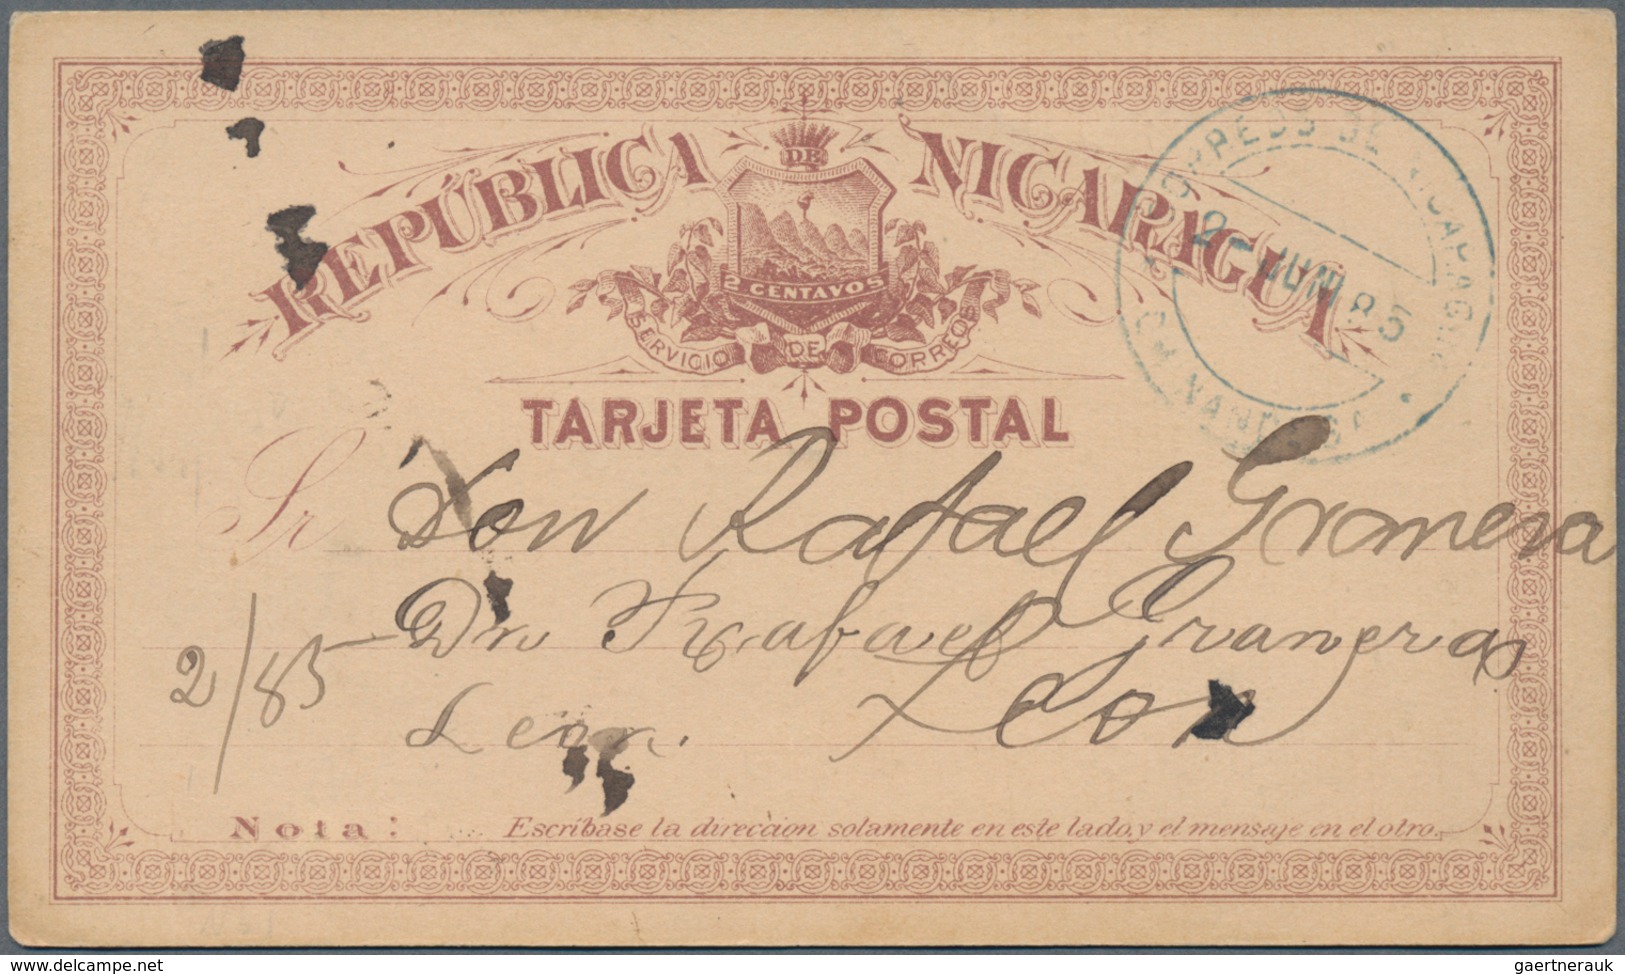 Mittel- und Südamerika: 1880/1910 (ca.), collection/holding of apprx. 290 unused and used stationeri